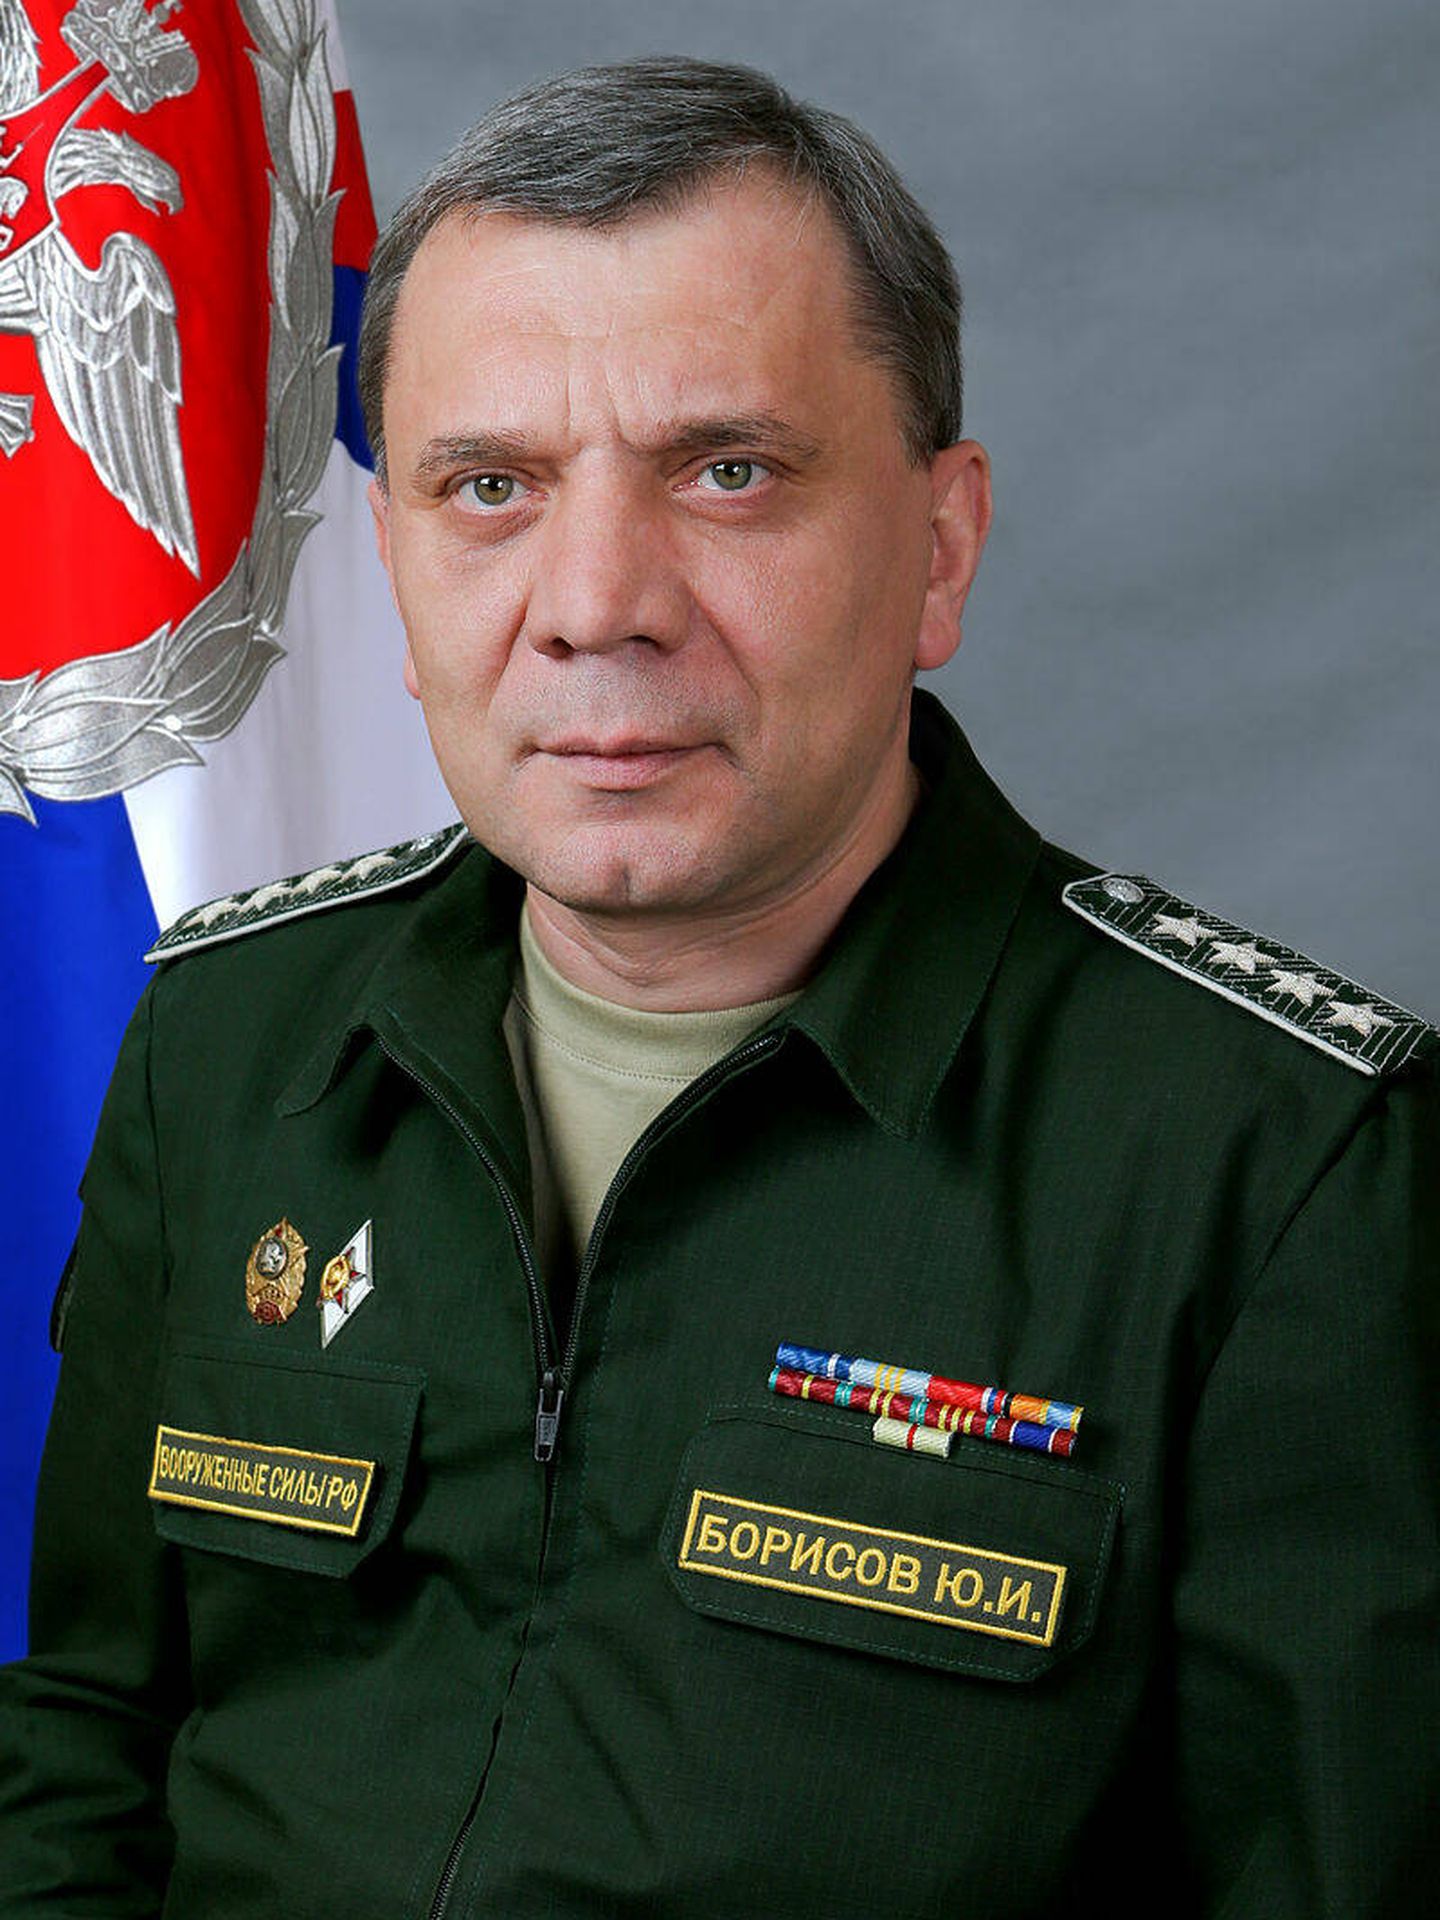 Yuri Ivanovich Borisov en foto oficial con uniforme militar.